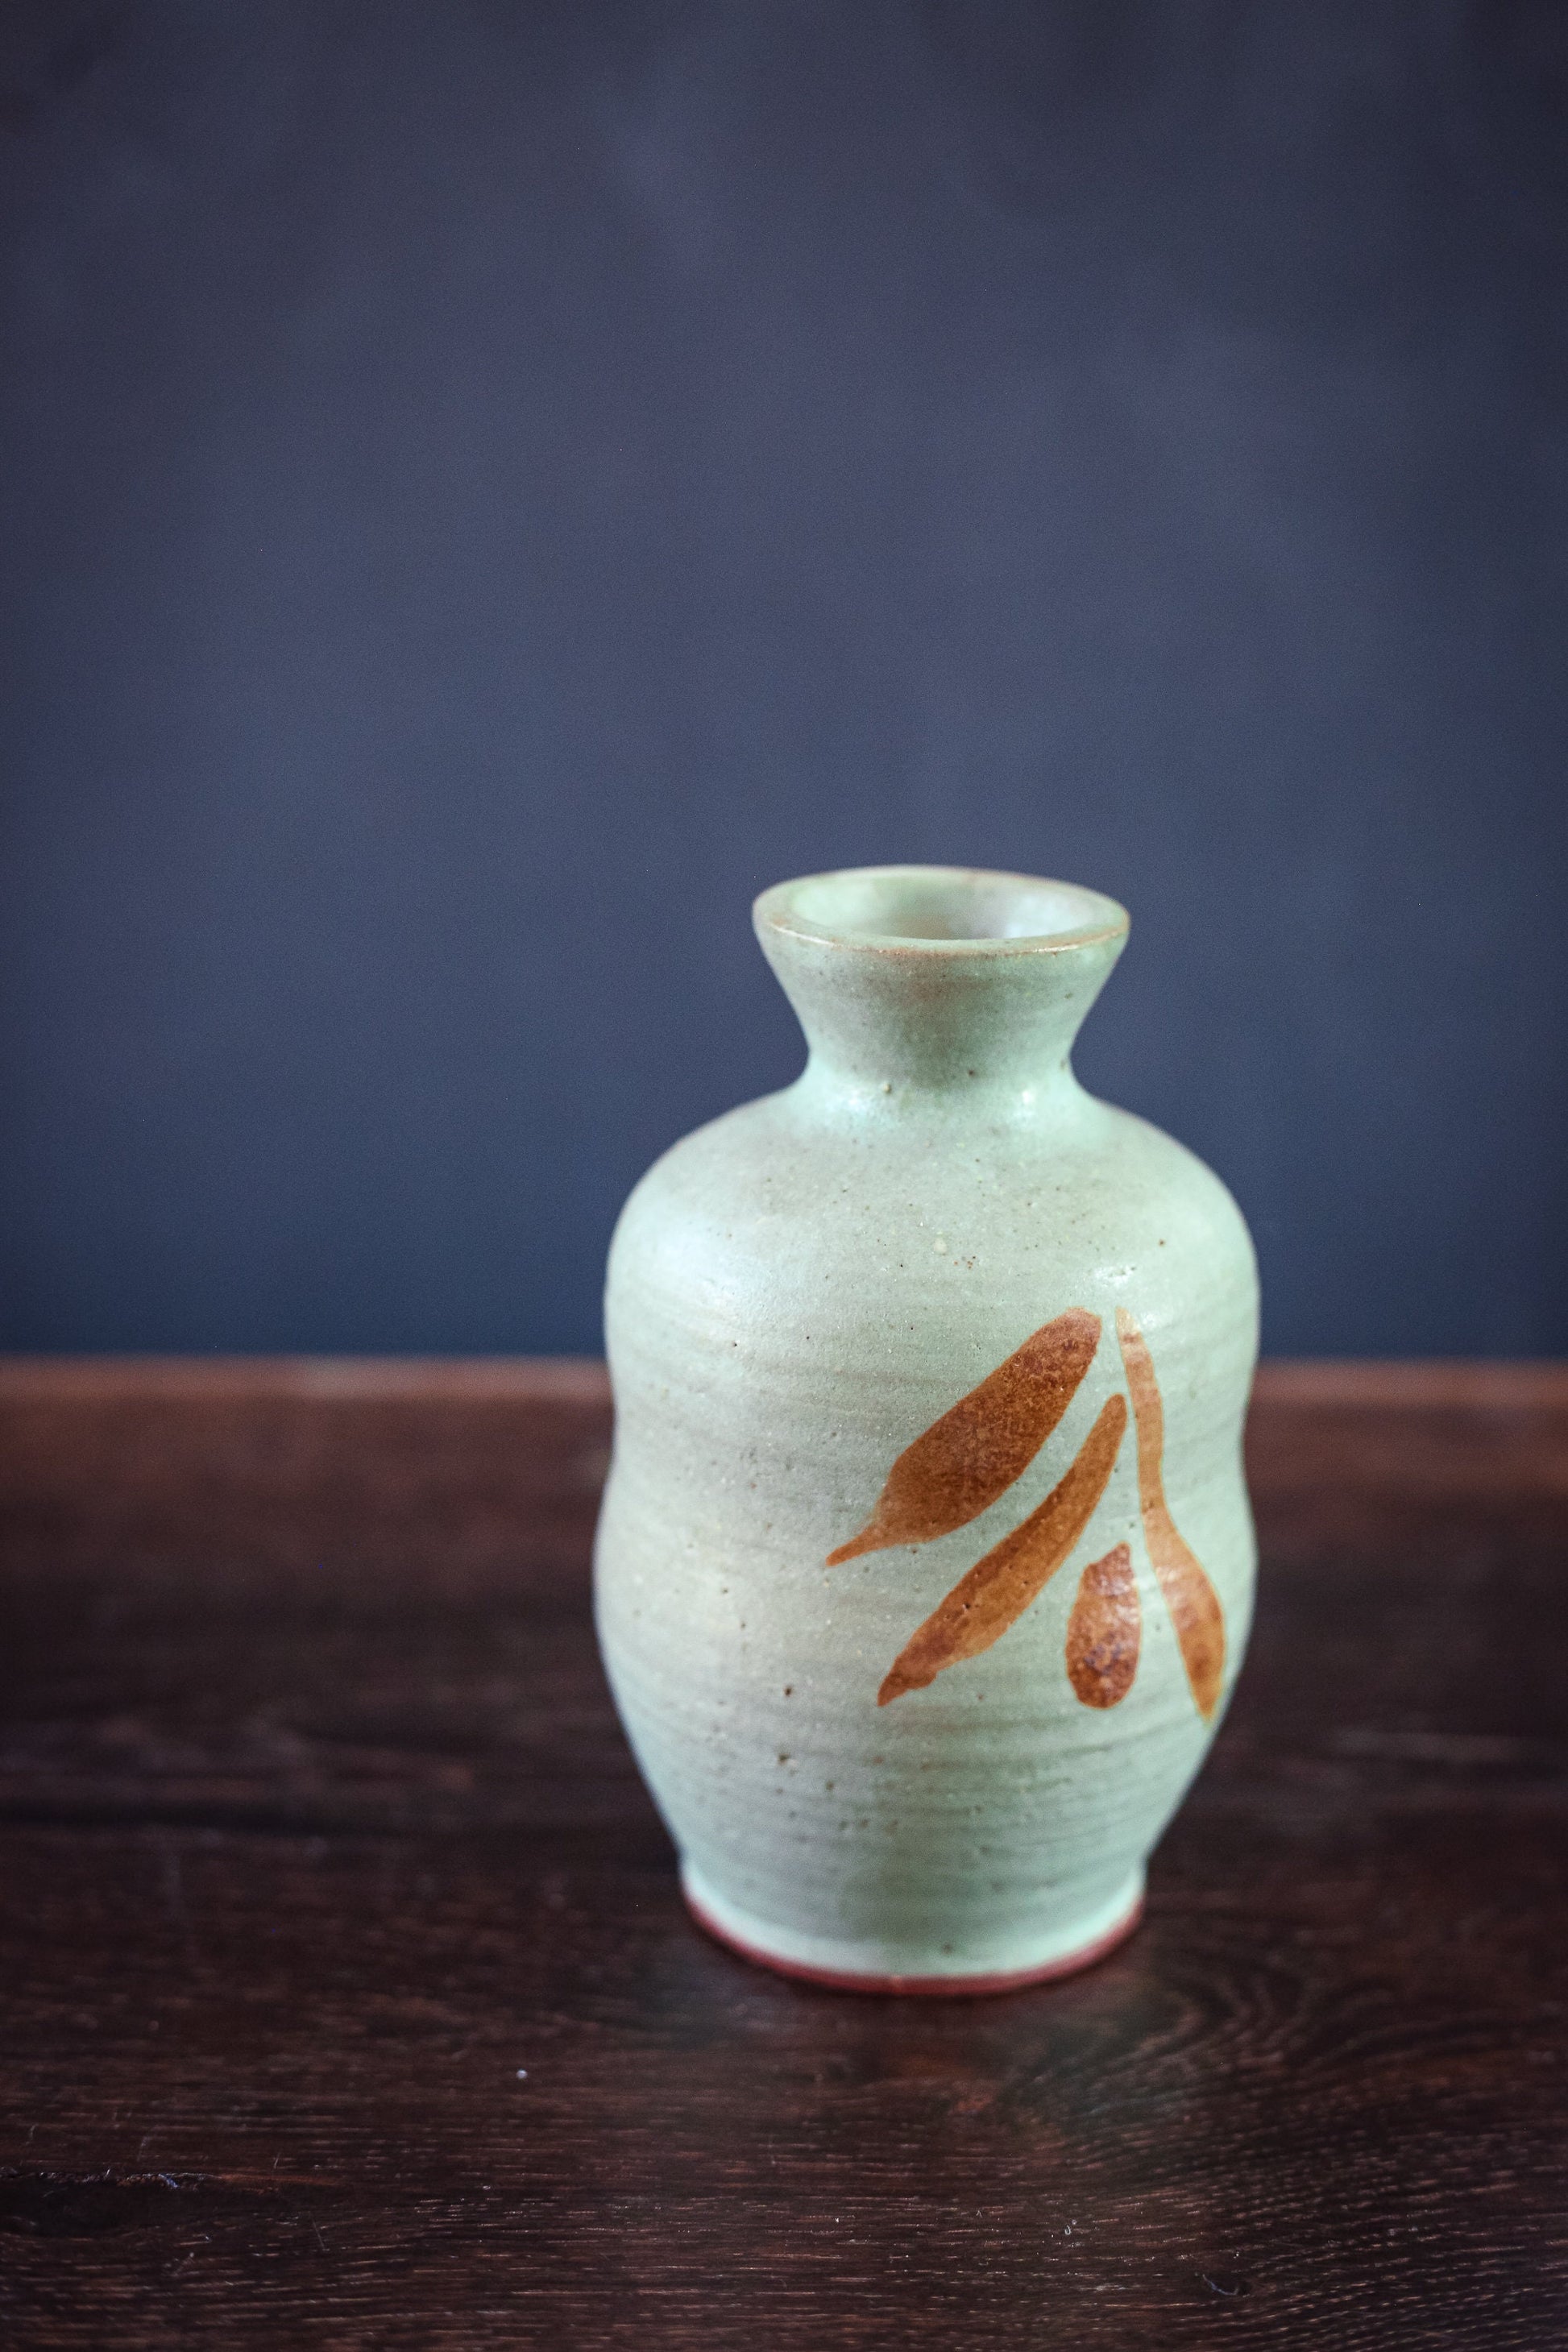 Minimal Celadon & Yellow Hand Thrown Ceramic Bud Vase - Vintage Studio Pottery Vase